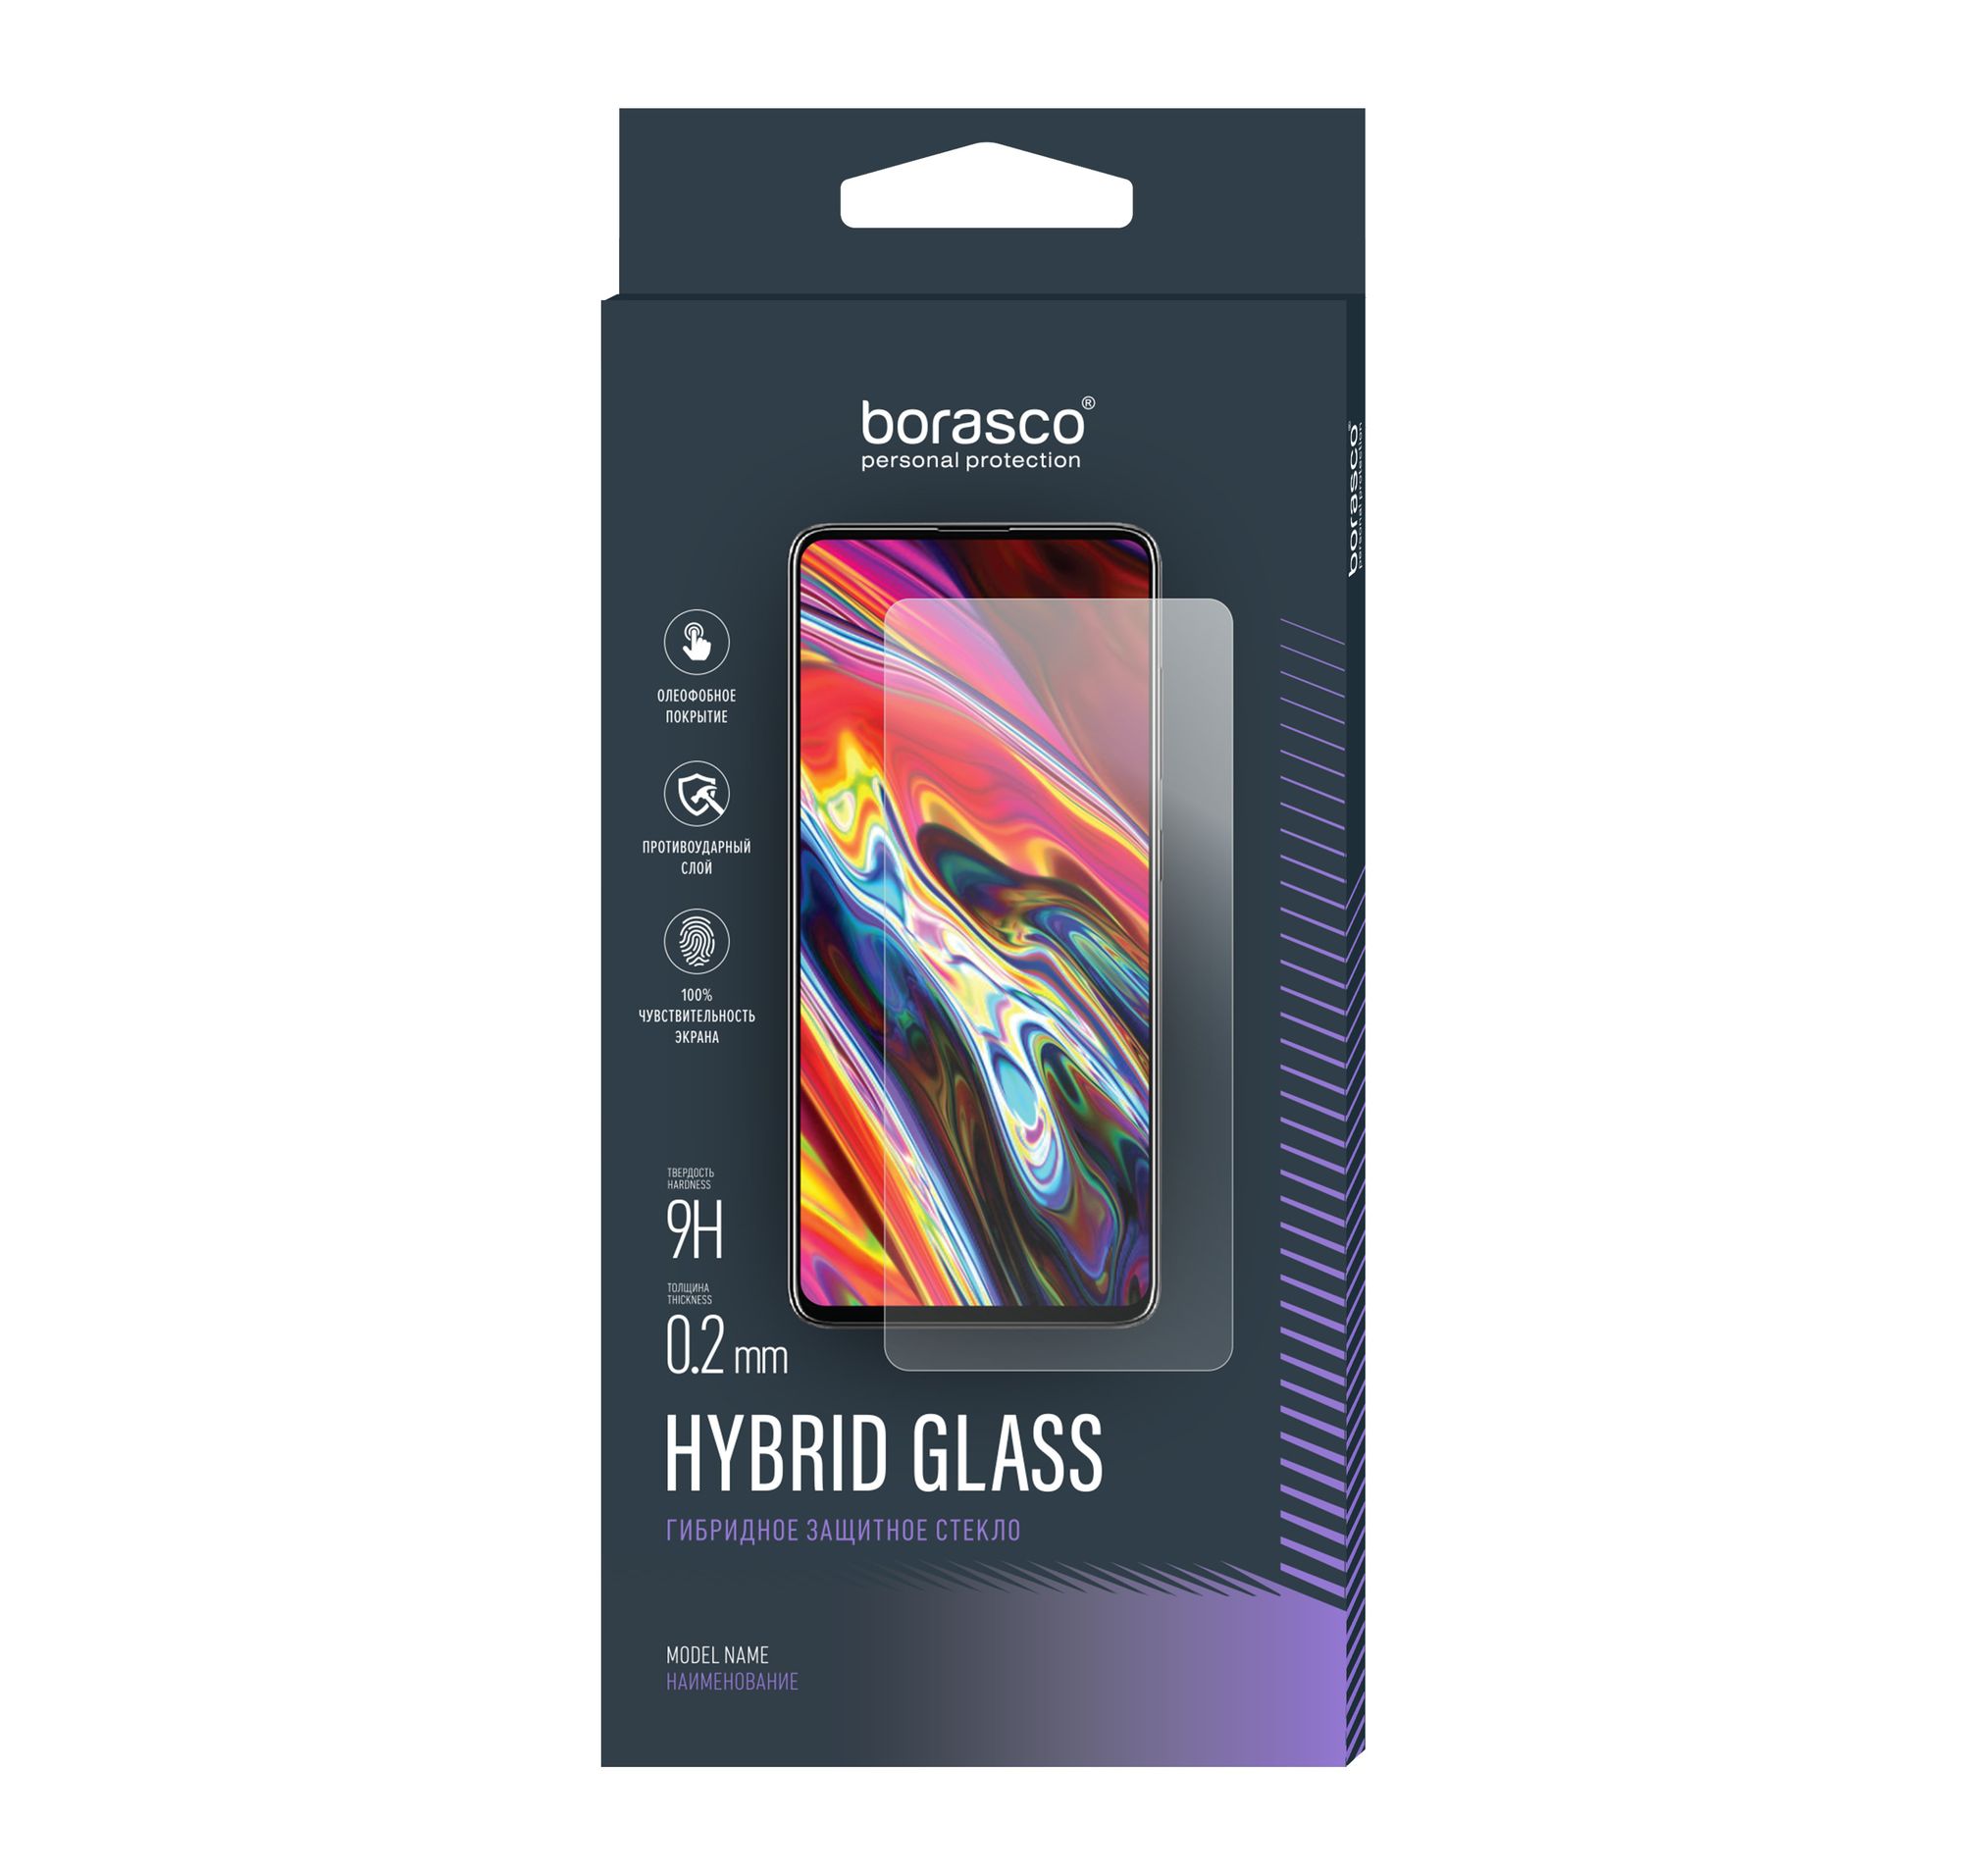 Стекло защитное Hybrid Glass VSP 0,26 мм для Prestigio Grace R7 защитное стекло для смартфона krutoff для prestigio grace r7